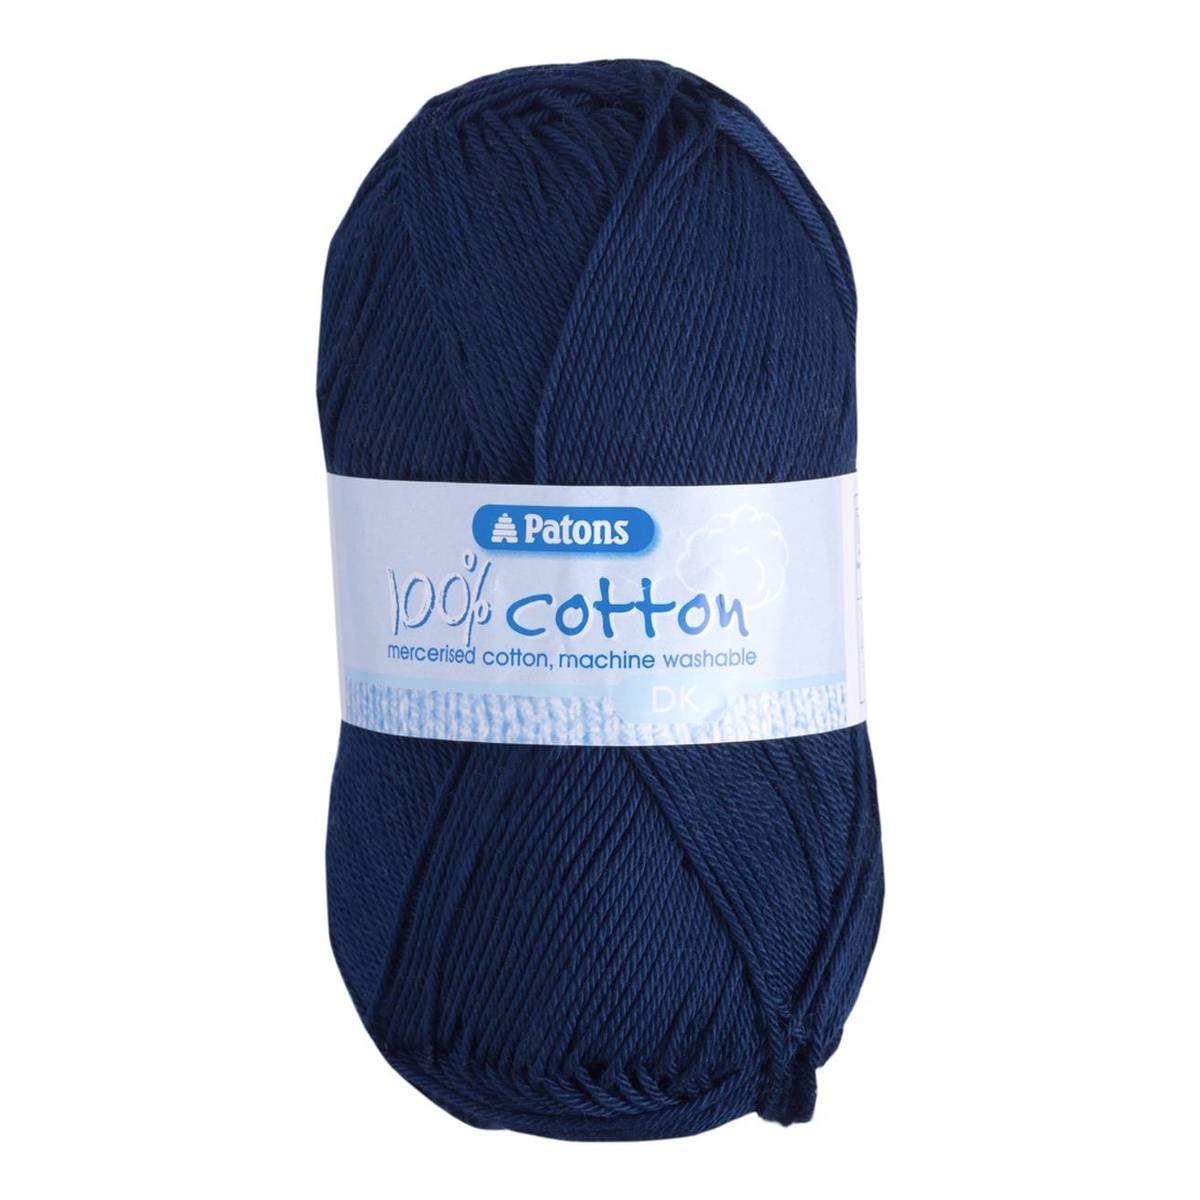 Patons Navy 100% Cotton DK Yarn 100g | Hobbycraft